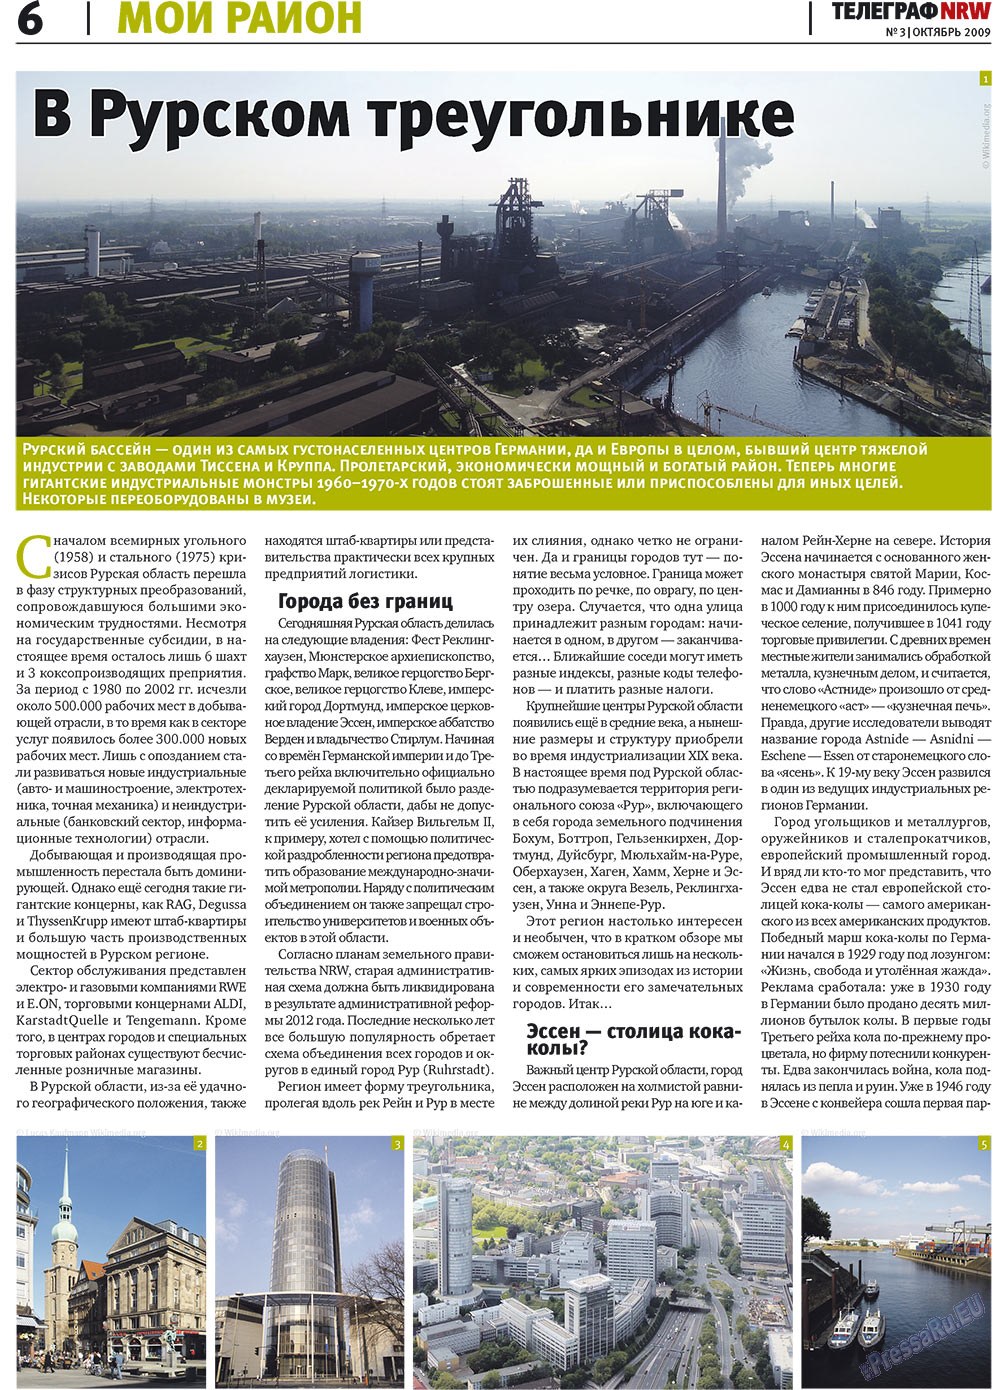 Телеграф NRW, газета. 2009 №3 стр.6